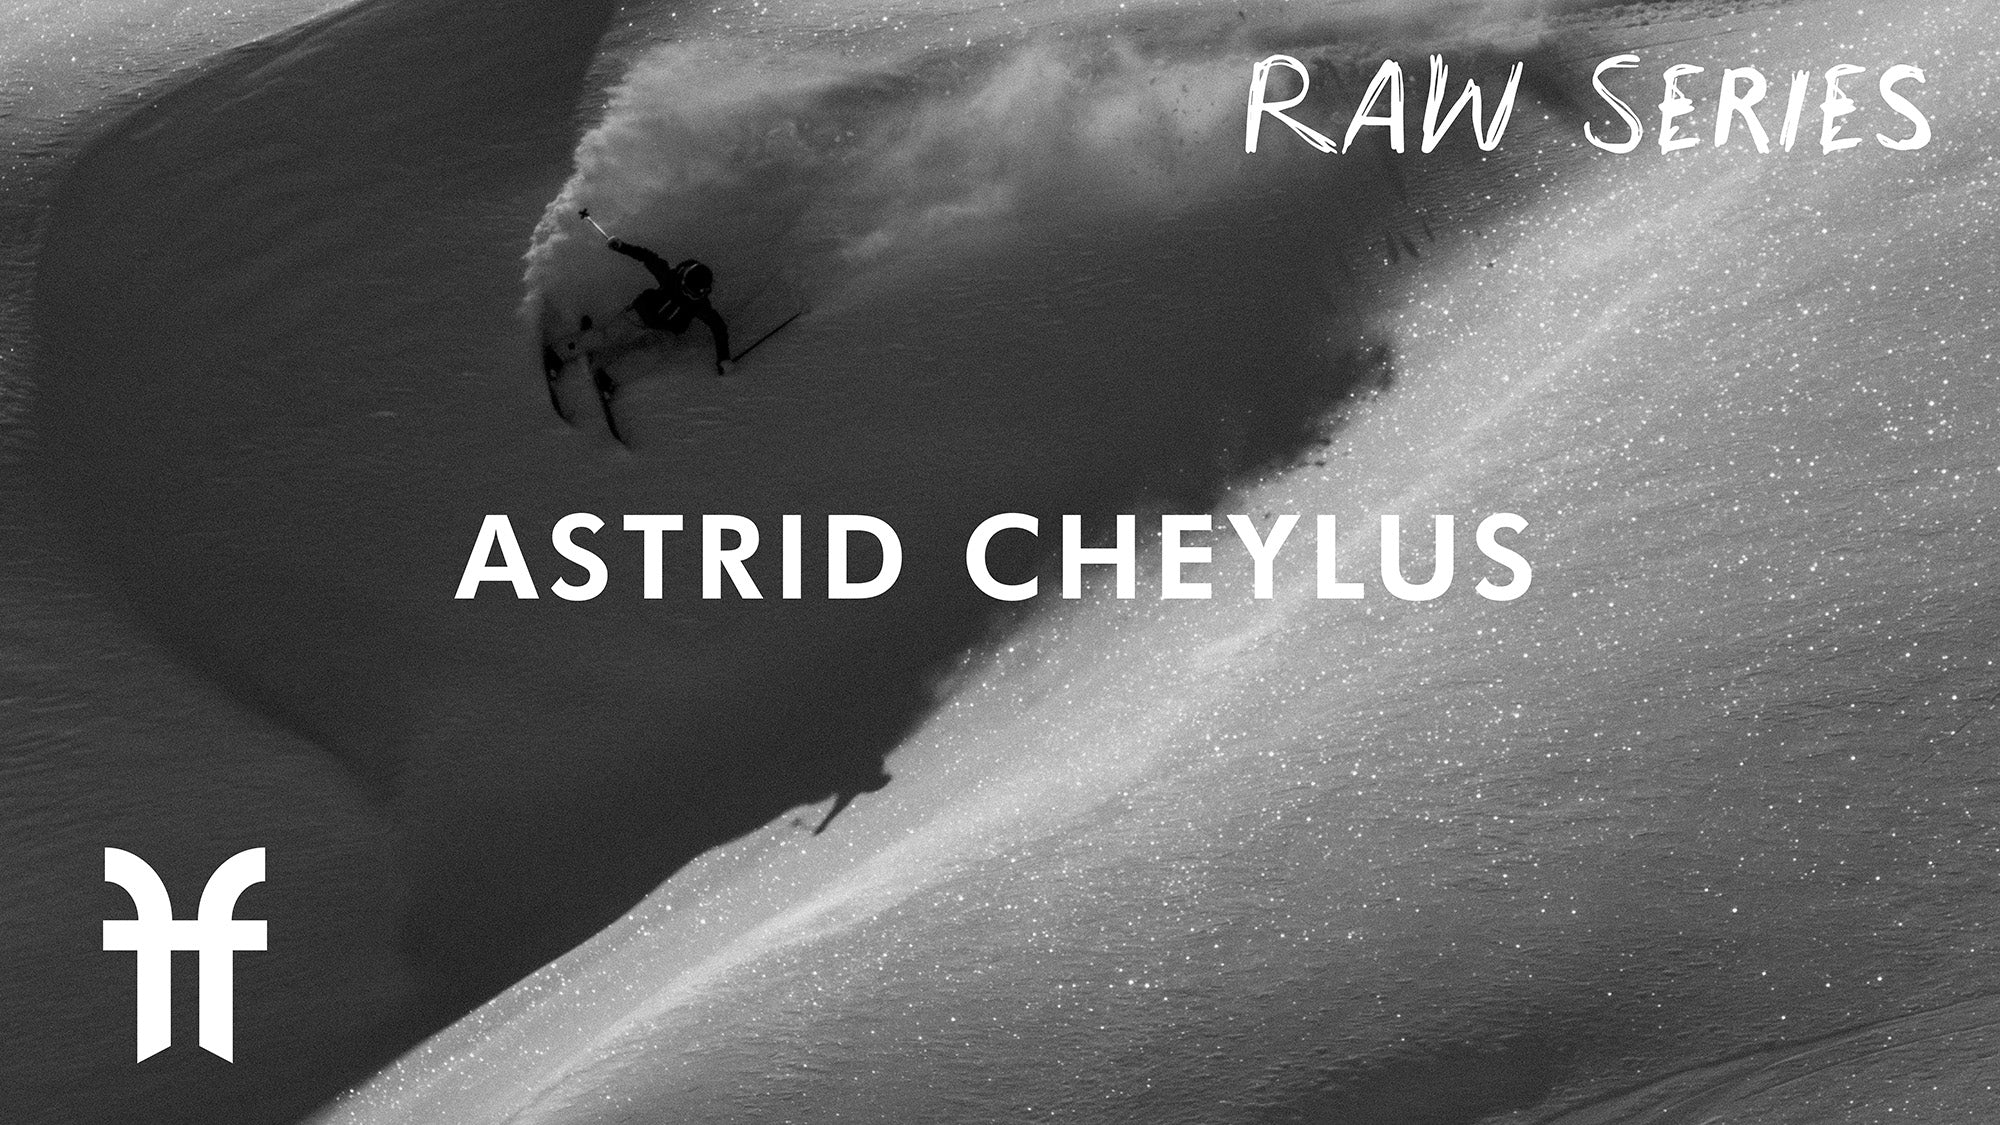 RAW SERIES: S01 E02 | Astrid Cheylus